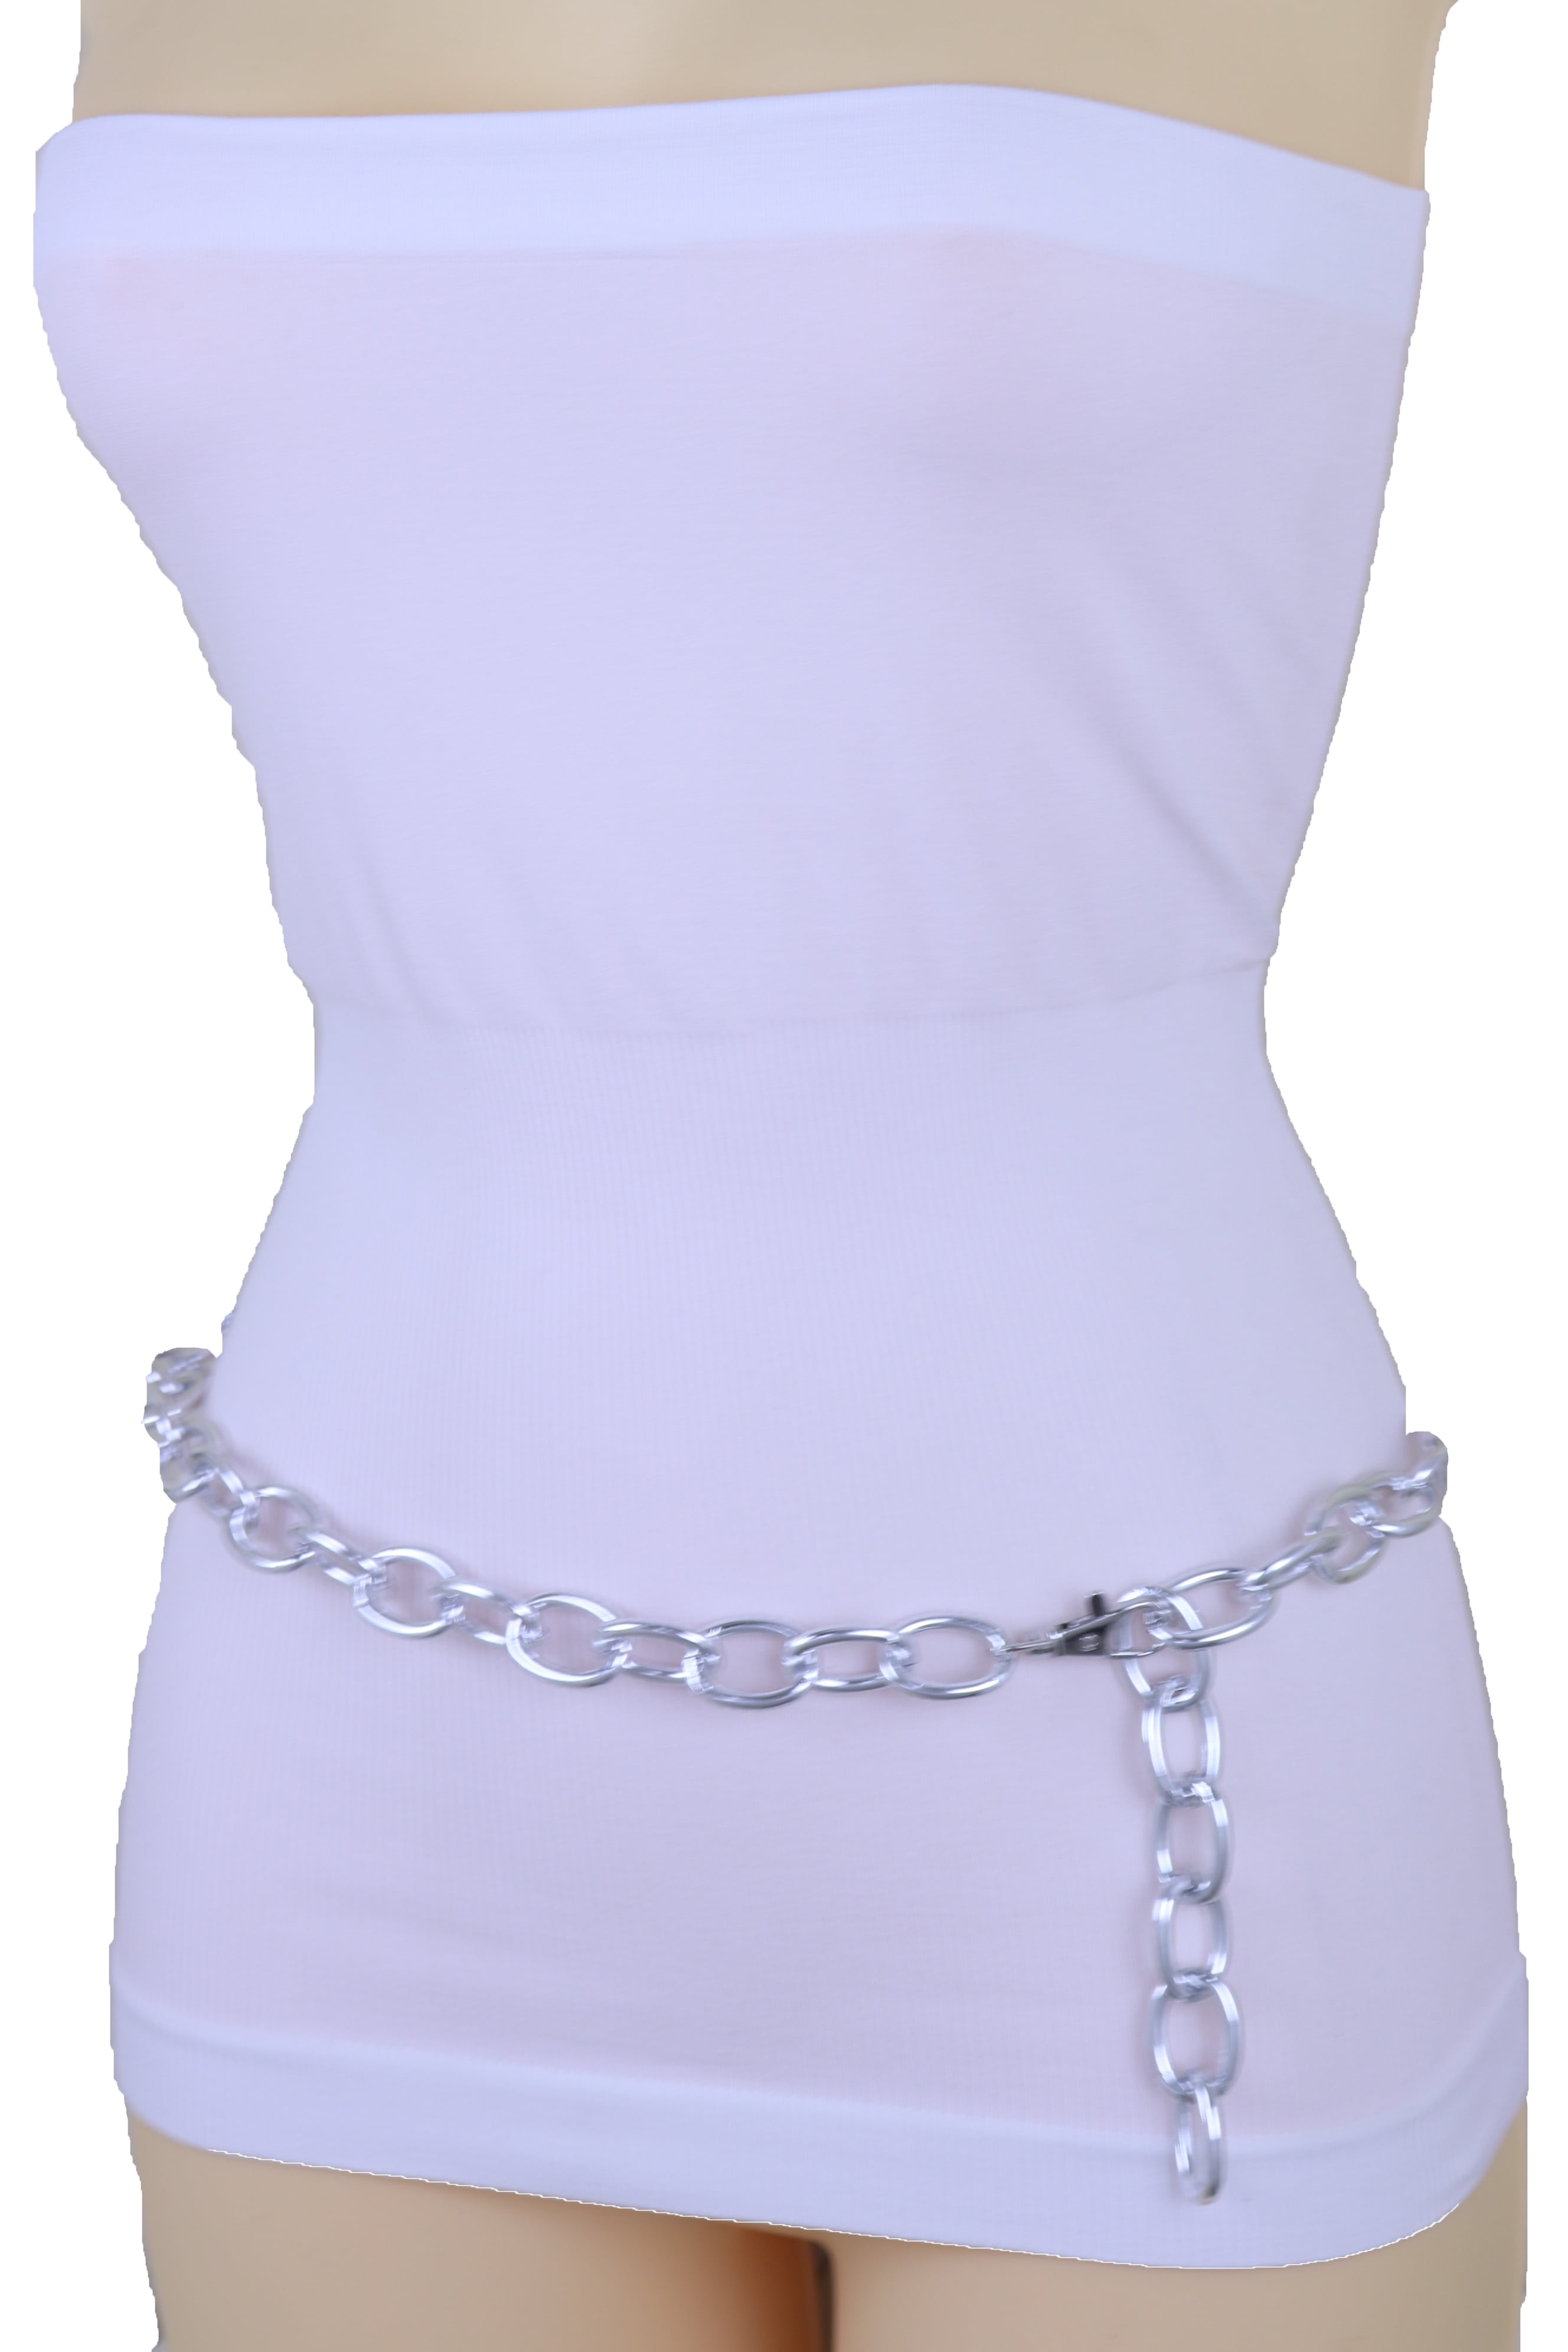 Women High Waist Hip Fashion Belt Silver Metal Chain Roun Ring Charm Size M L XL 